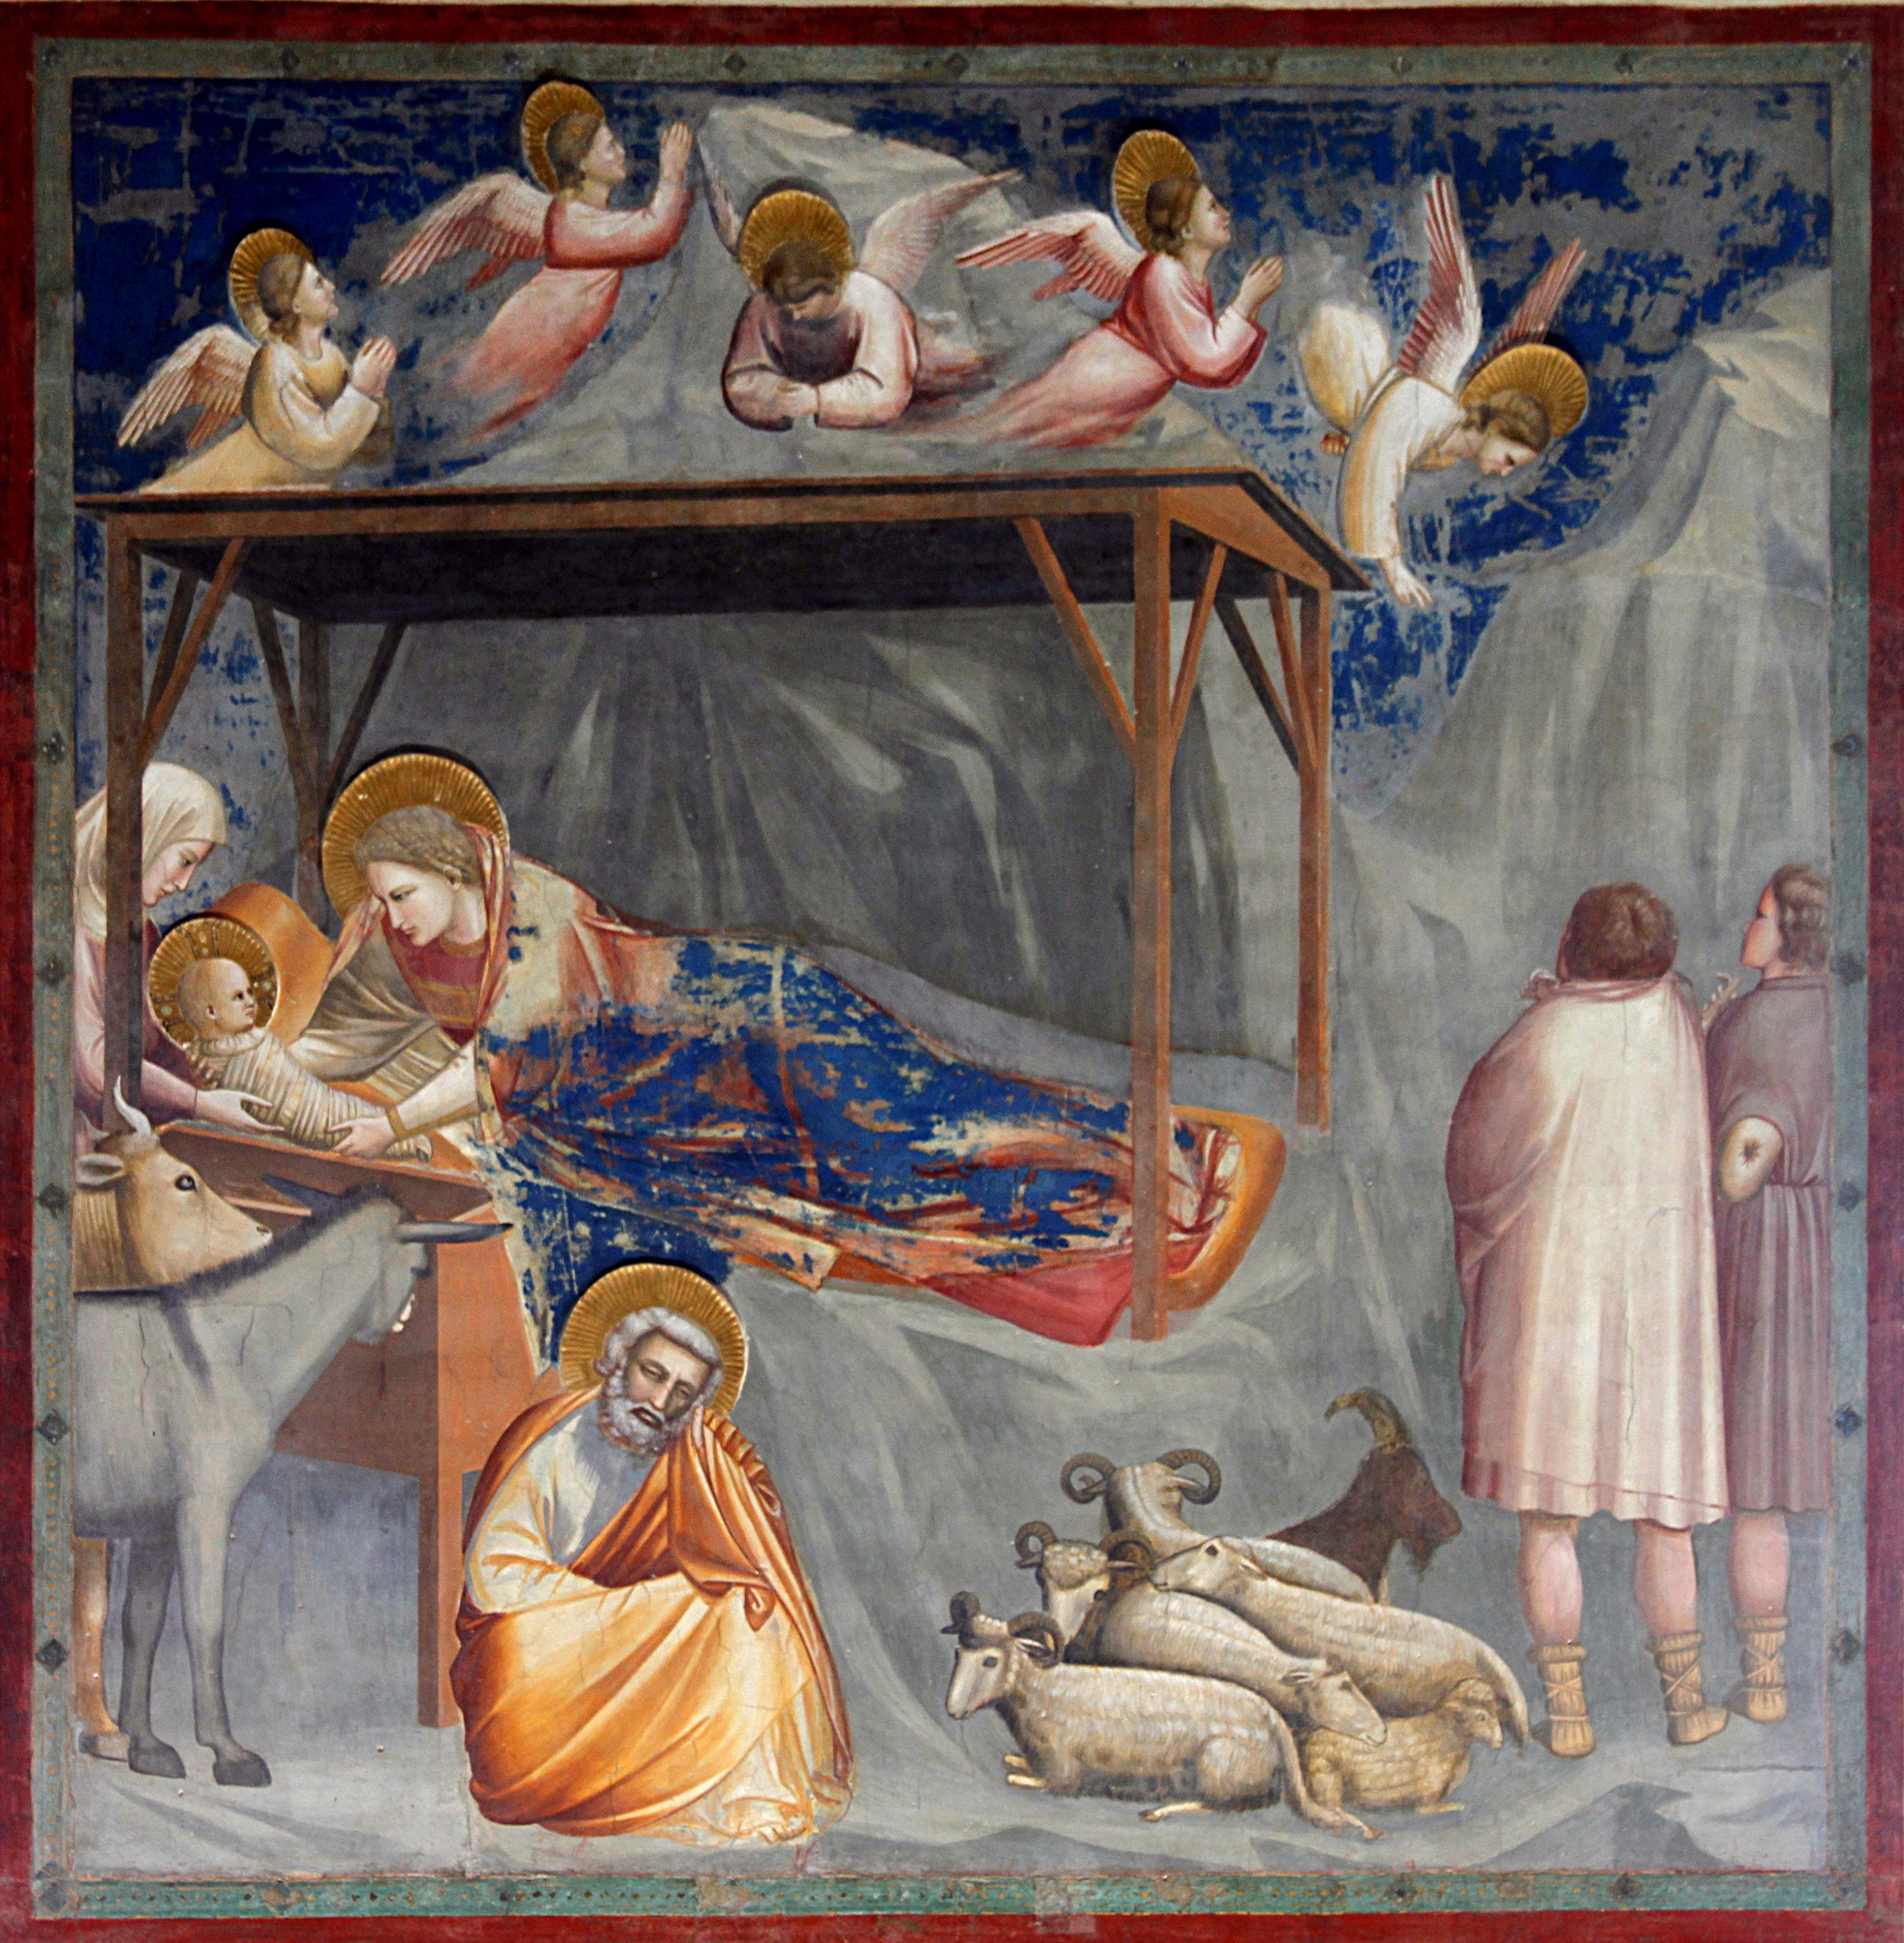 The Nativity by Giotto (Illustration) - World History